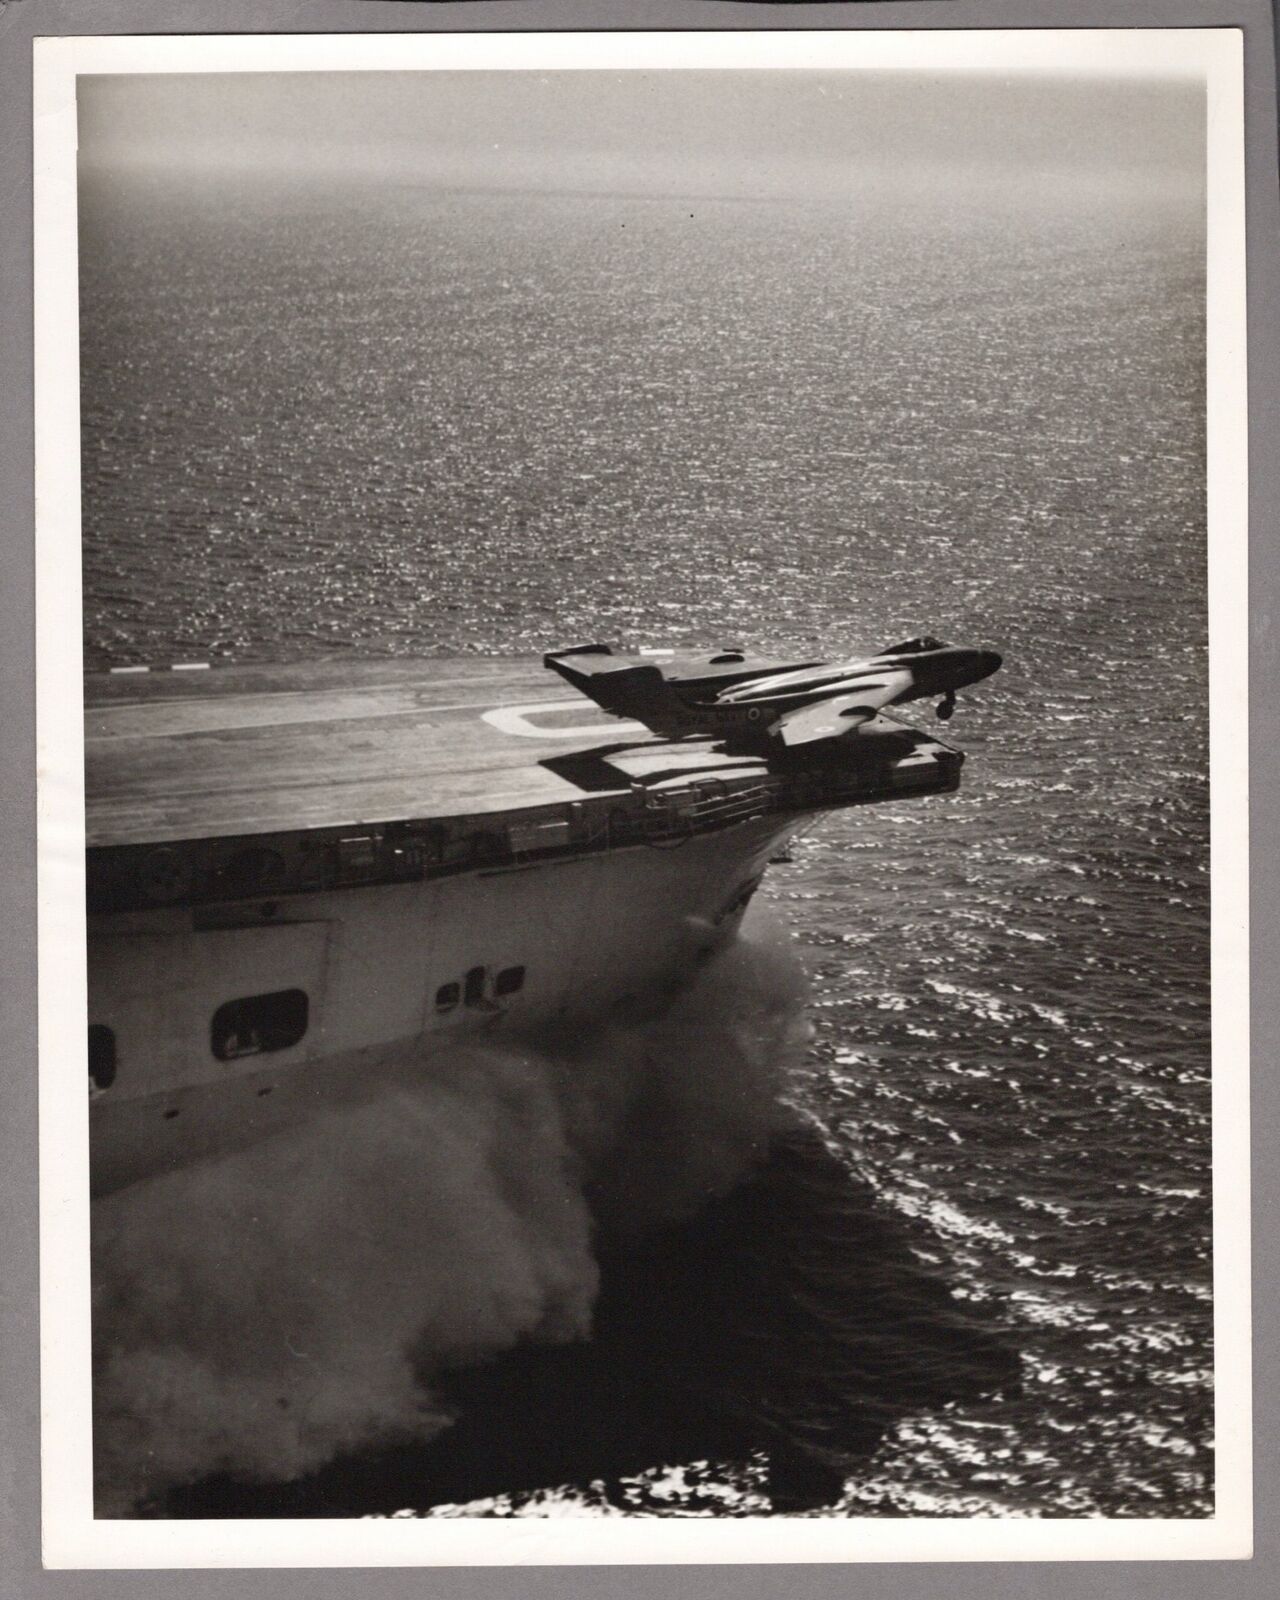 SEA VIXEN HMS ARK ROYAL LARGE ORIGINAL VINTAGE 1956 PRESS PHOTO DH110 ROYAL NAVY